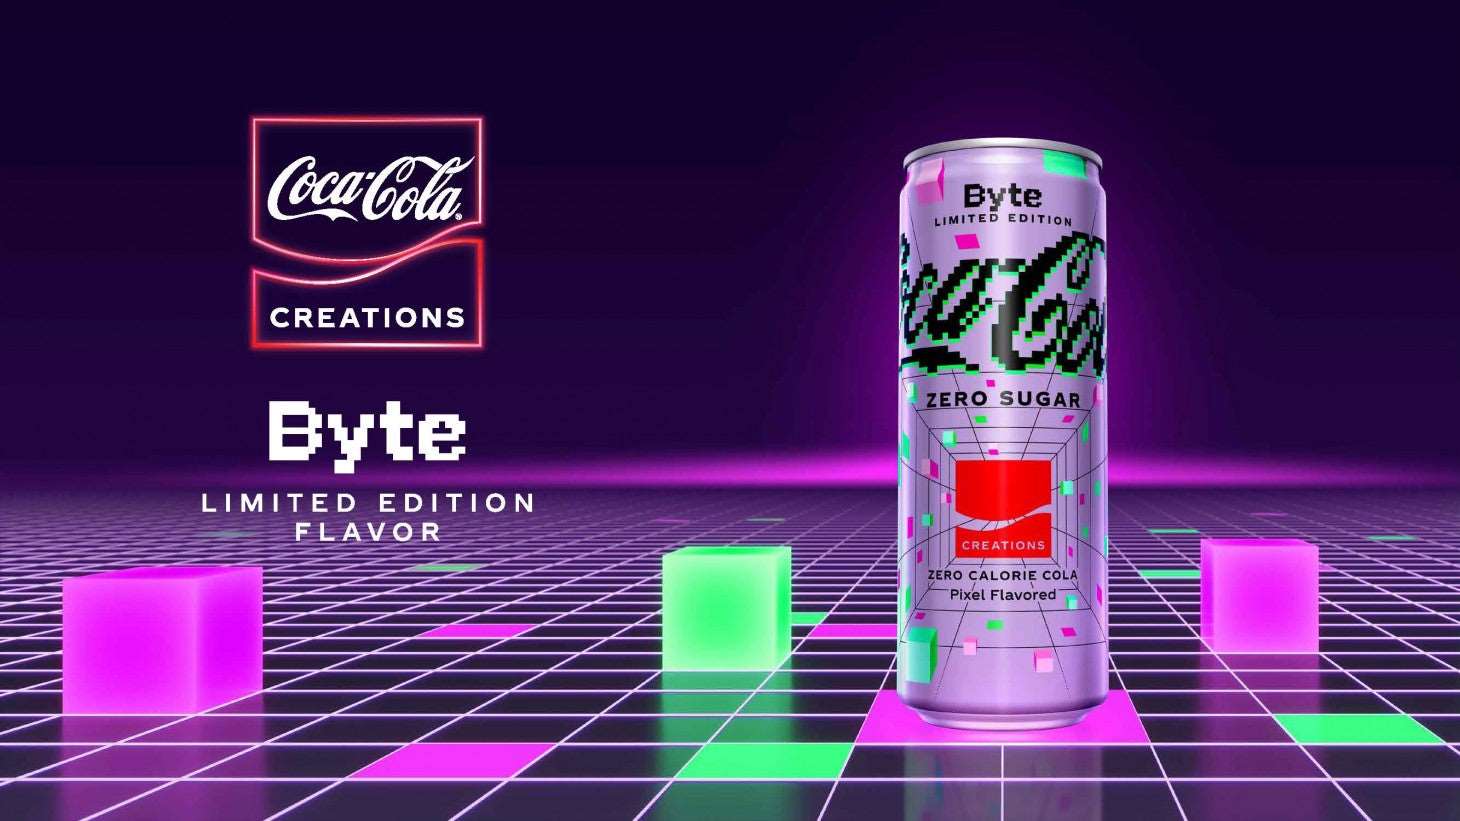 Coca Cola Byte Creations Box